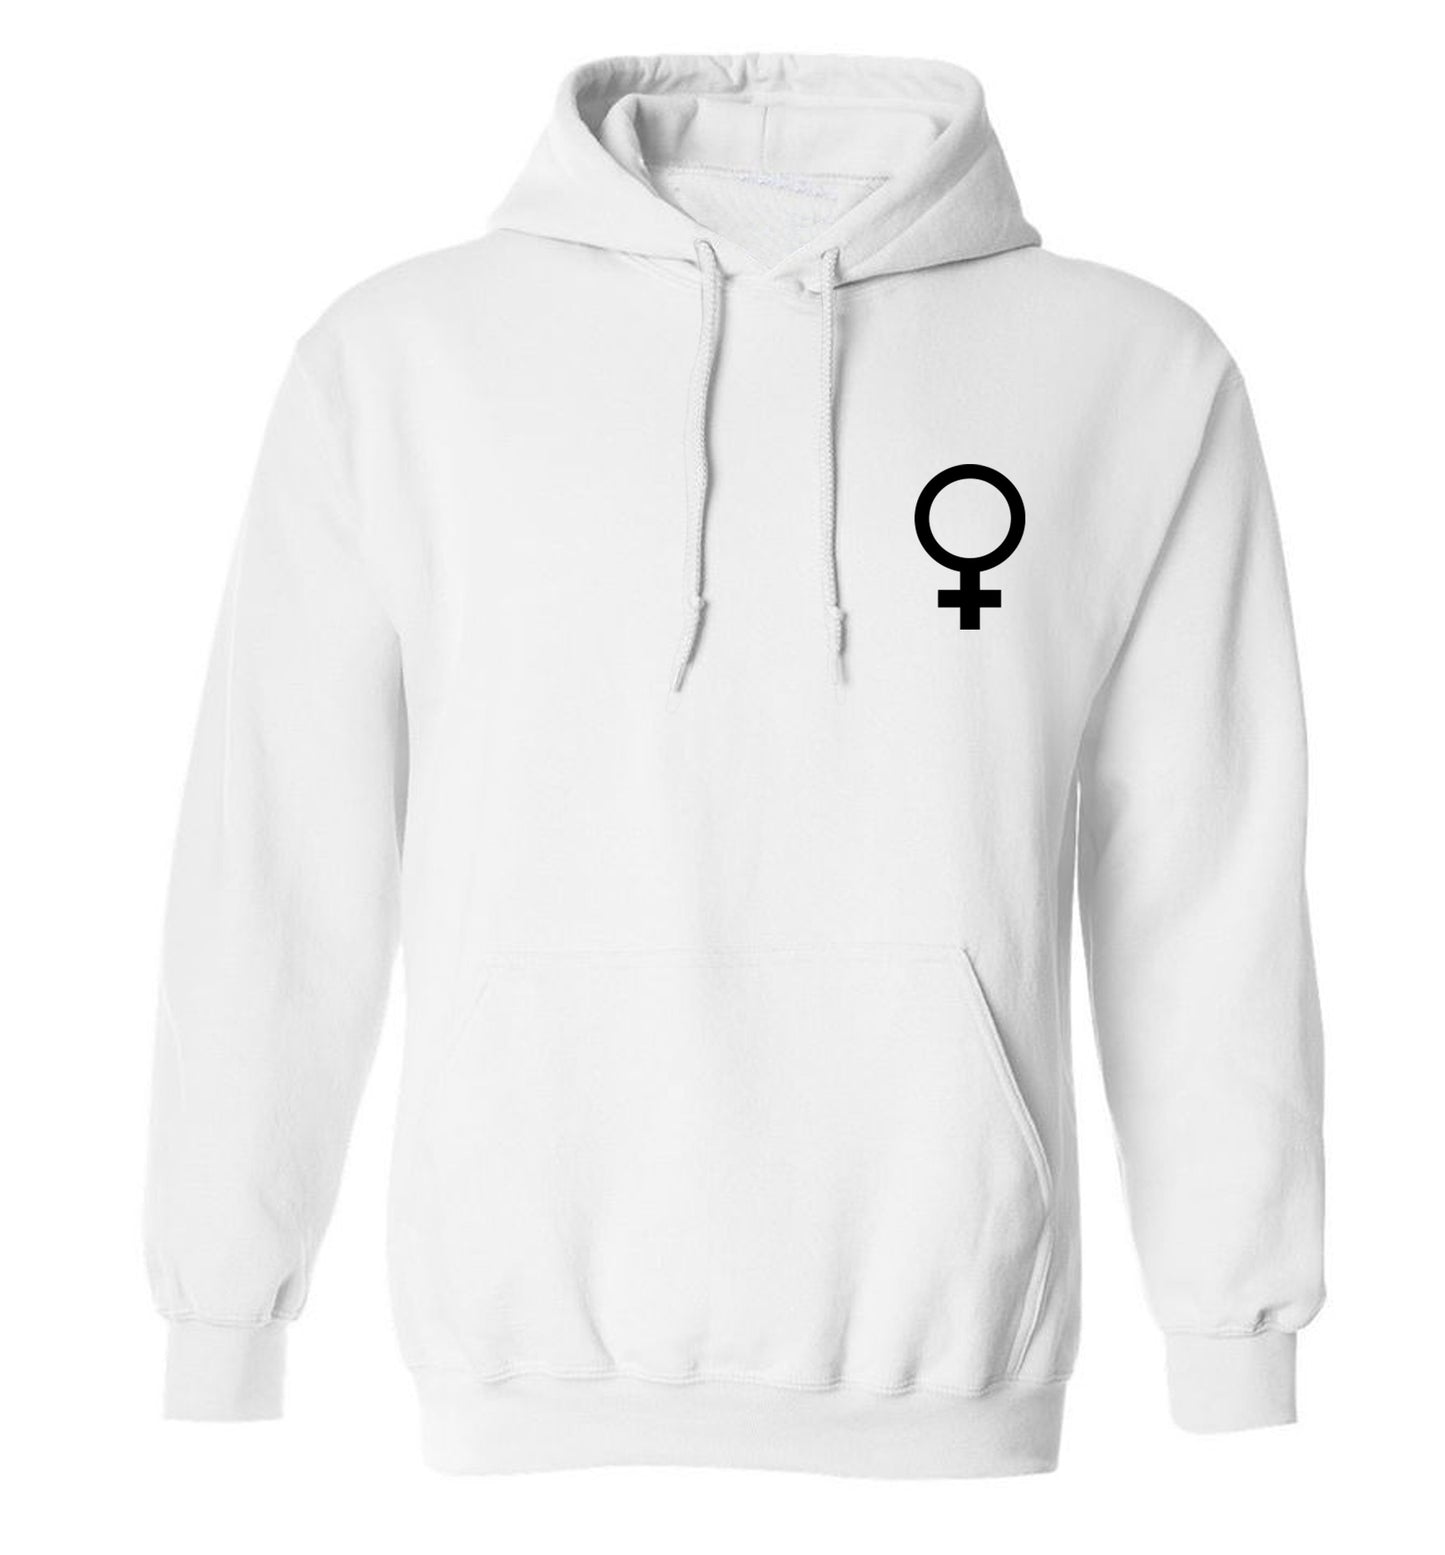 Female pocket symbol adults unisex white hoodie 2XL